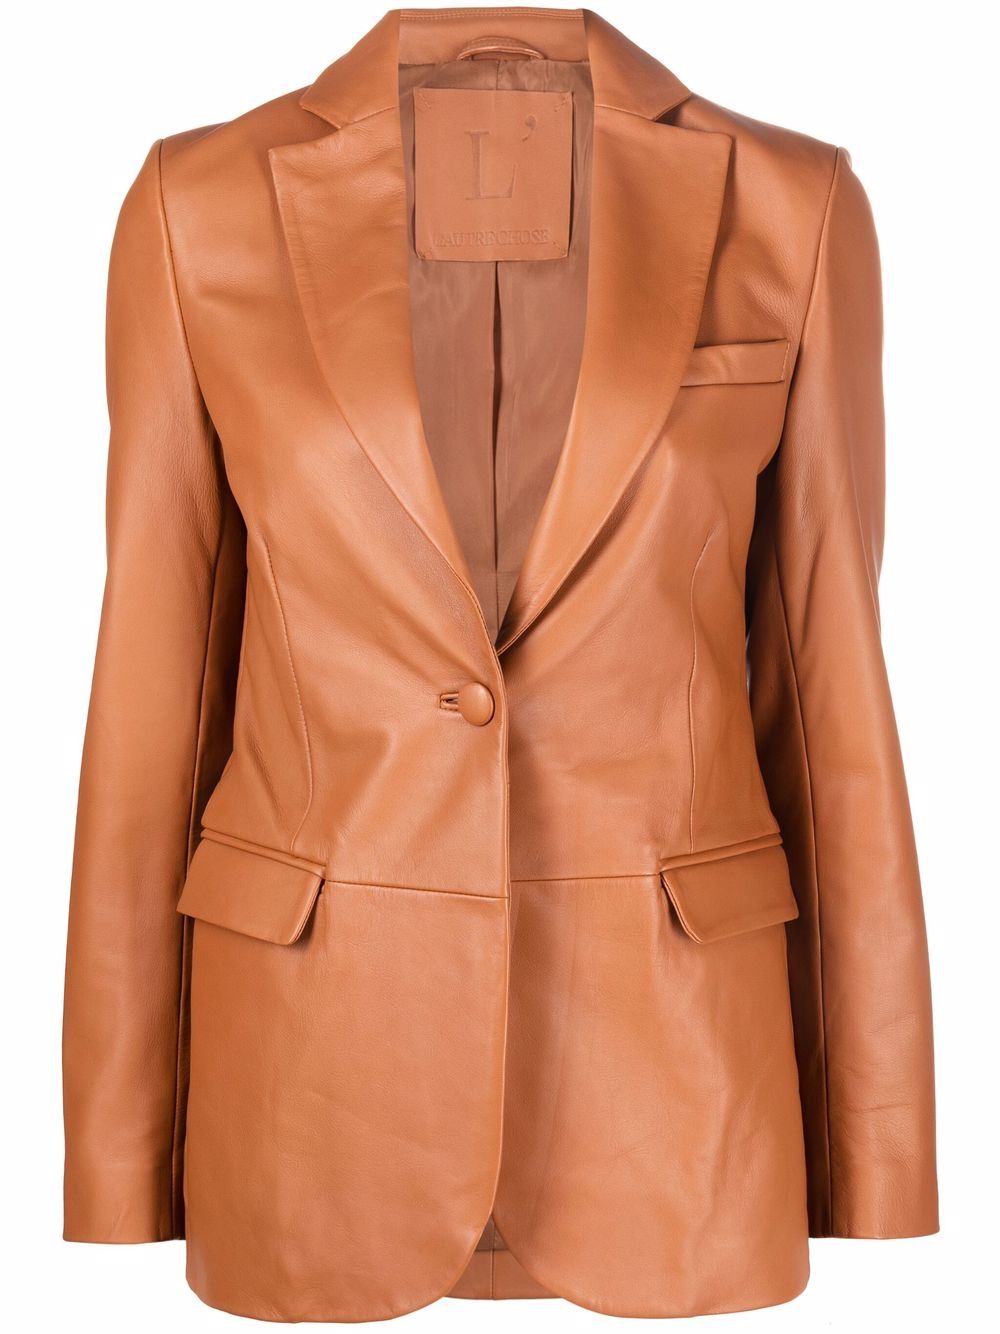 L'Autre Chose single-breasted leather blazer